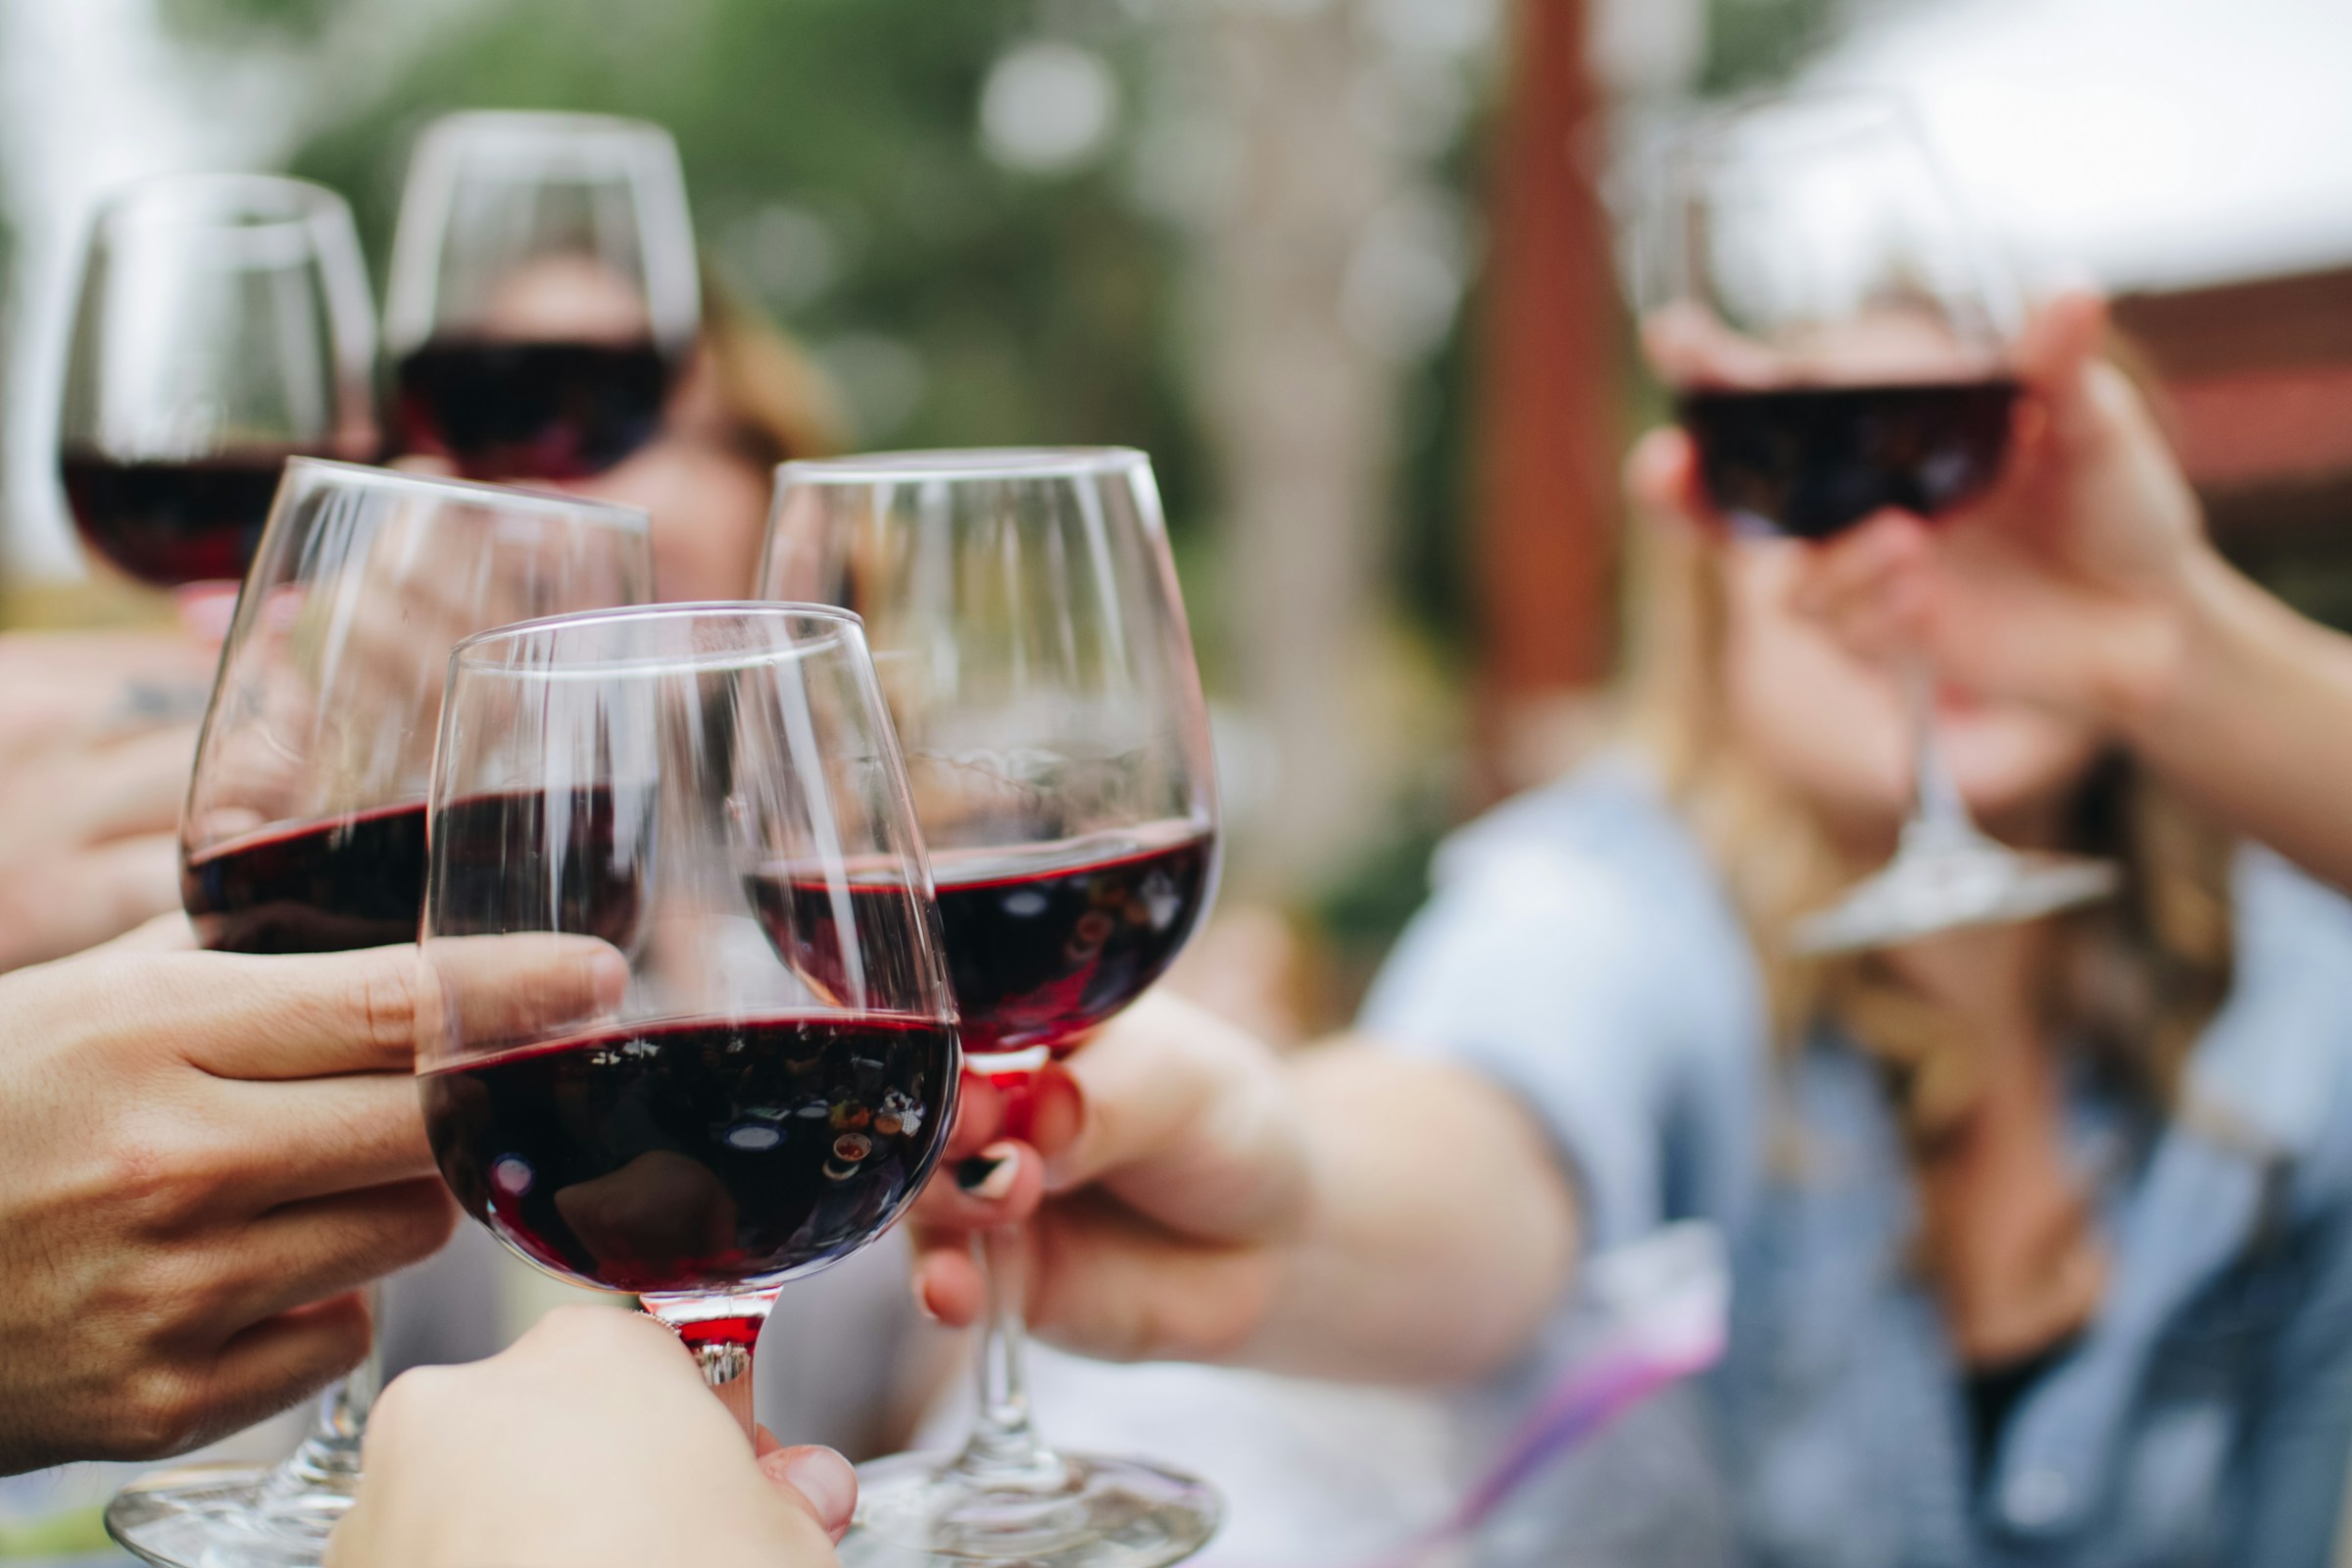 People holding glasses of wine | Source: Unsplash